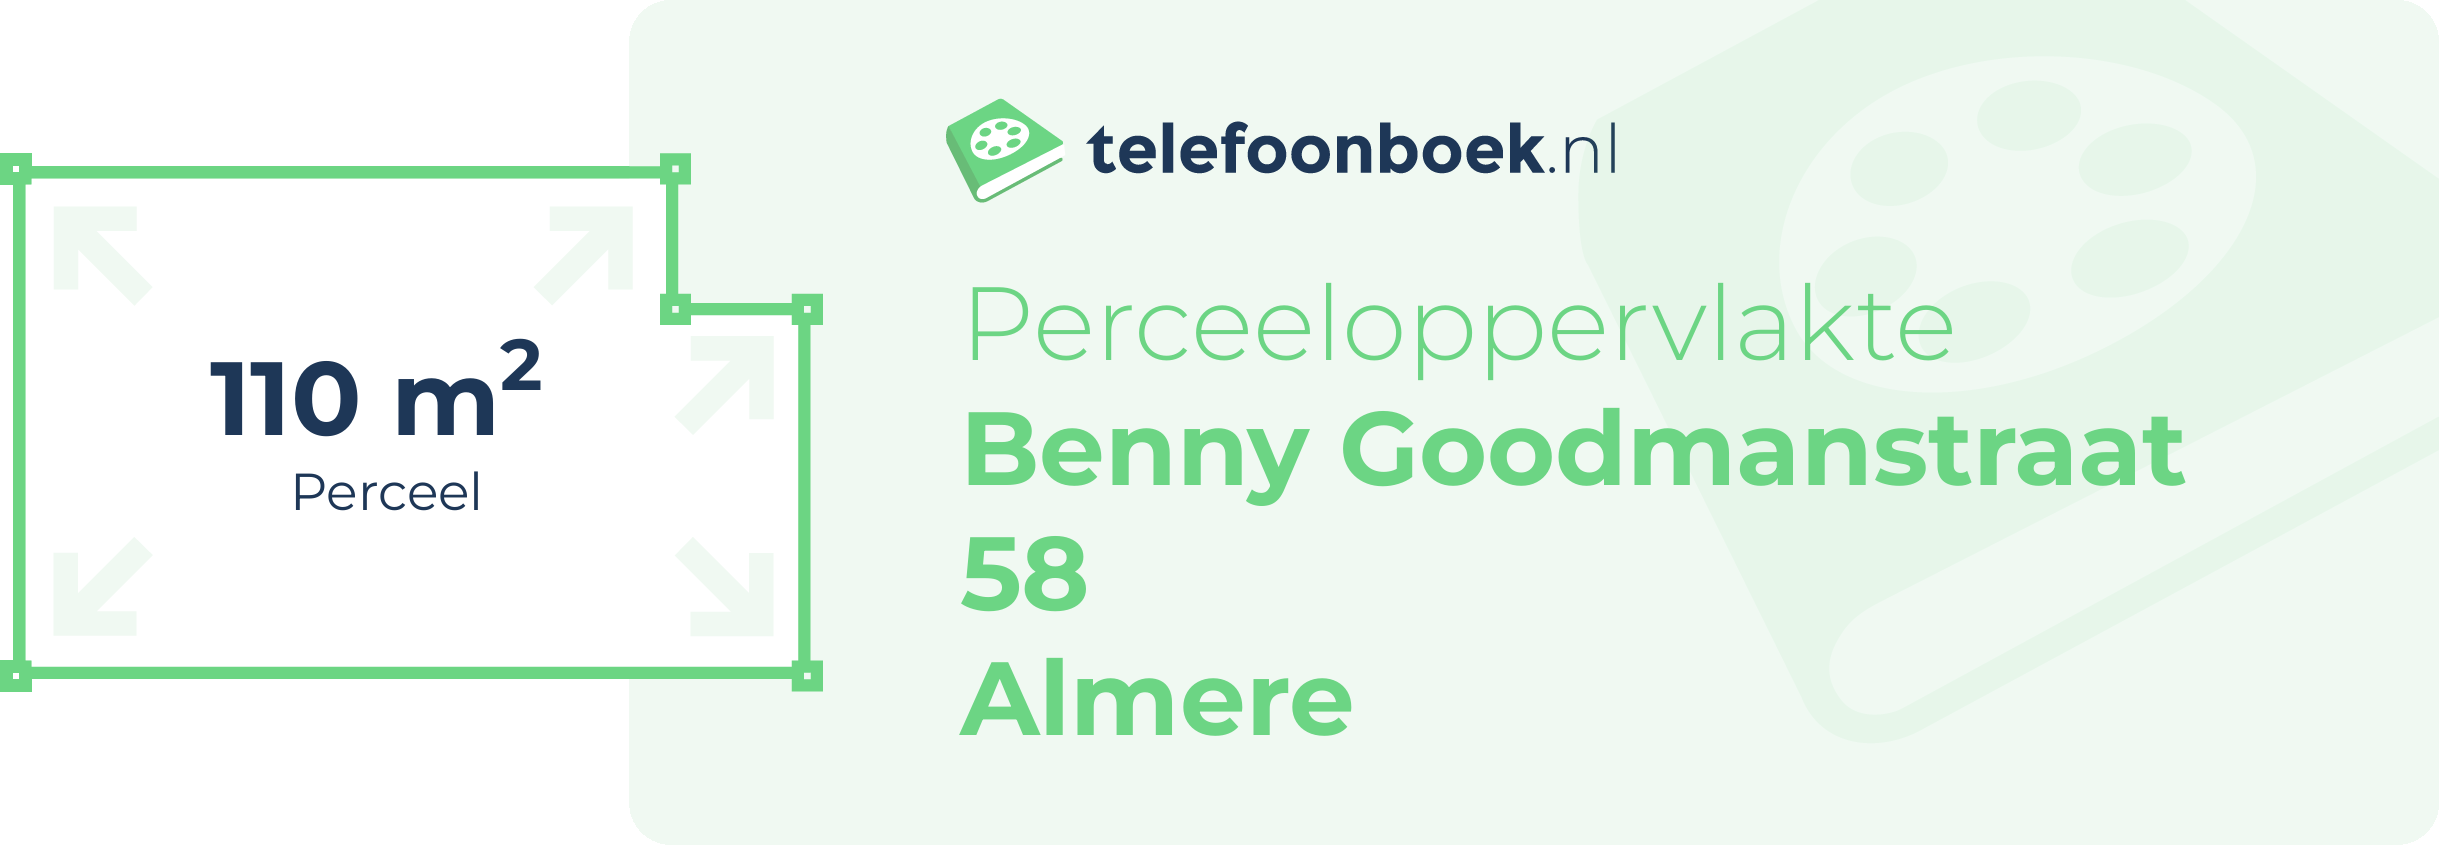 Perceeloppervlakte Benny Goodmanstraat 58 Almere